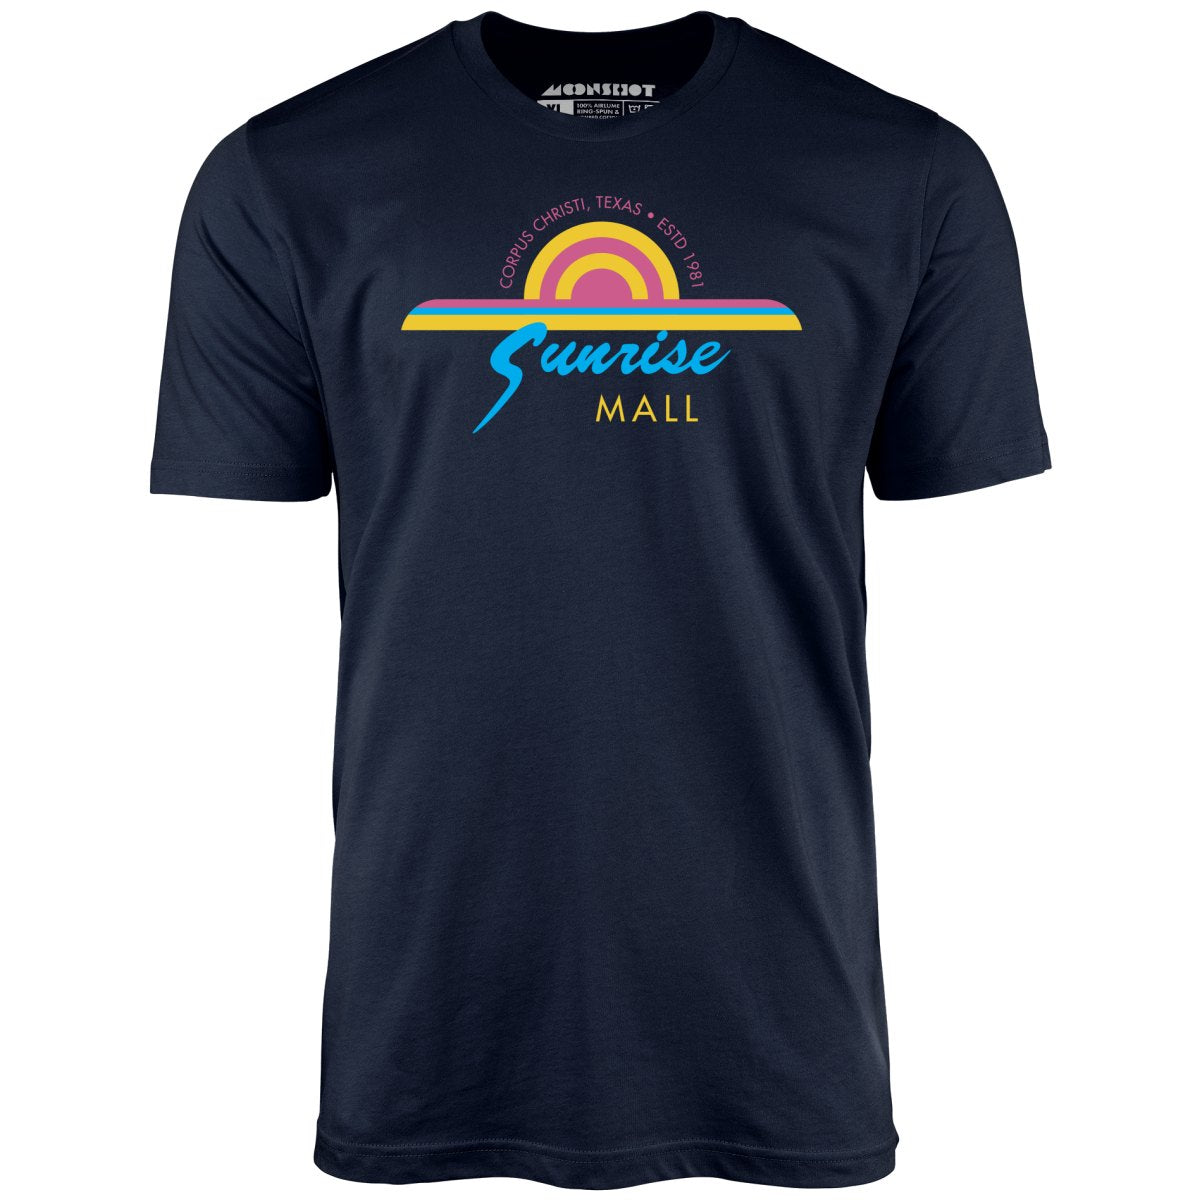 Sunrise Mall - Corpus Christi, TX - Dead Mall - Unisex T-Shirt